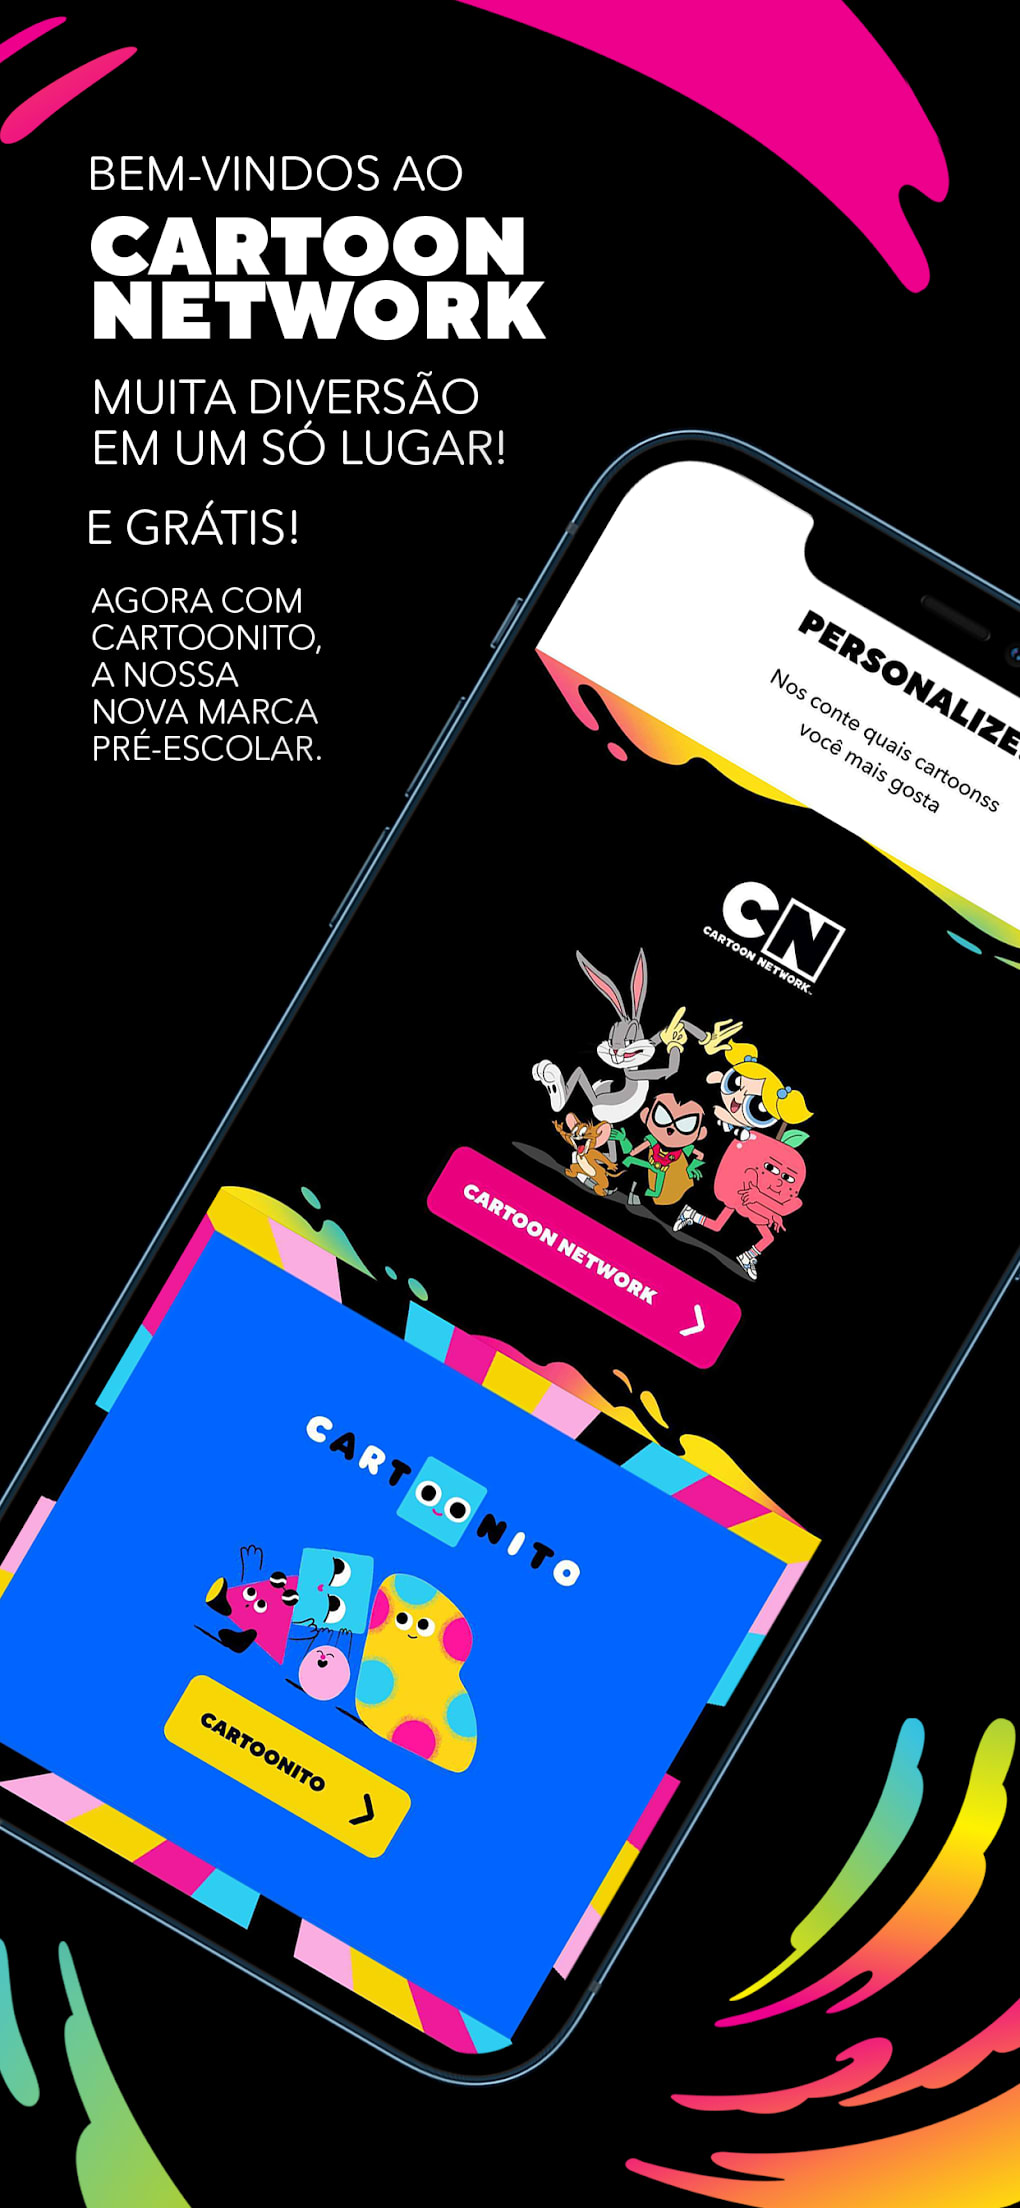 55+ ảnh nền điện thoại cute dành cho fan của We Bare Bears - BlogAnChoi |  Fans, Cartoon network, Gấu xám